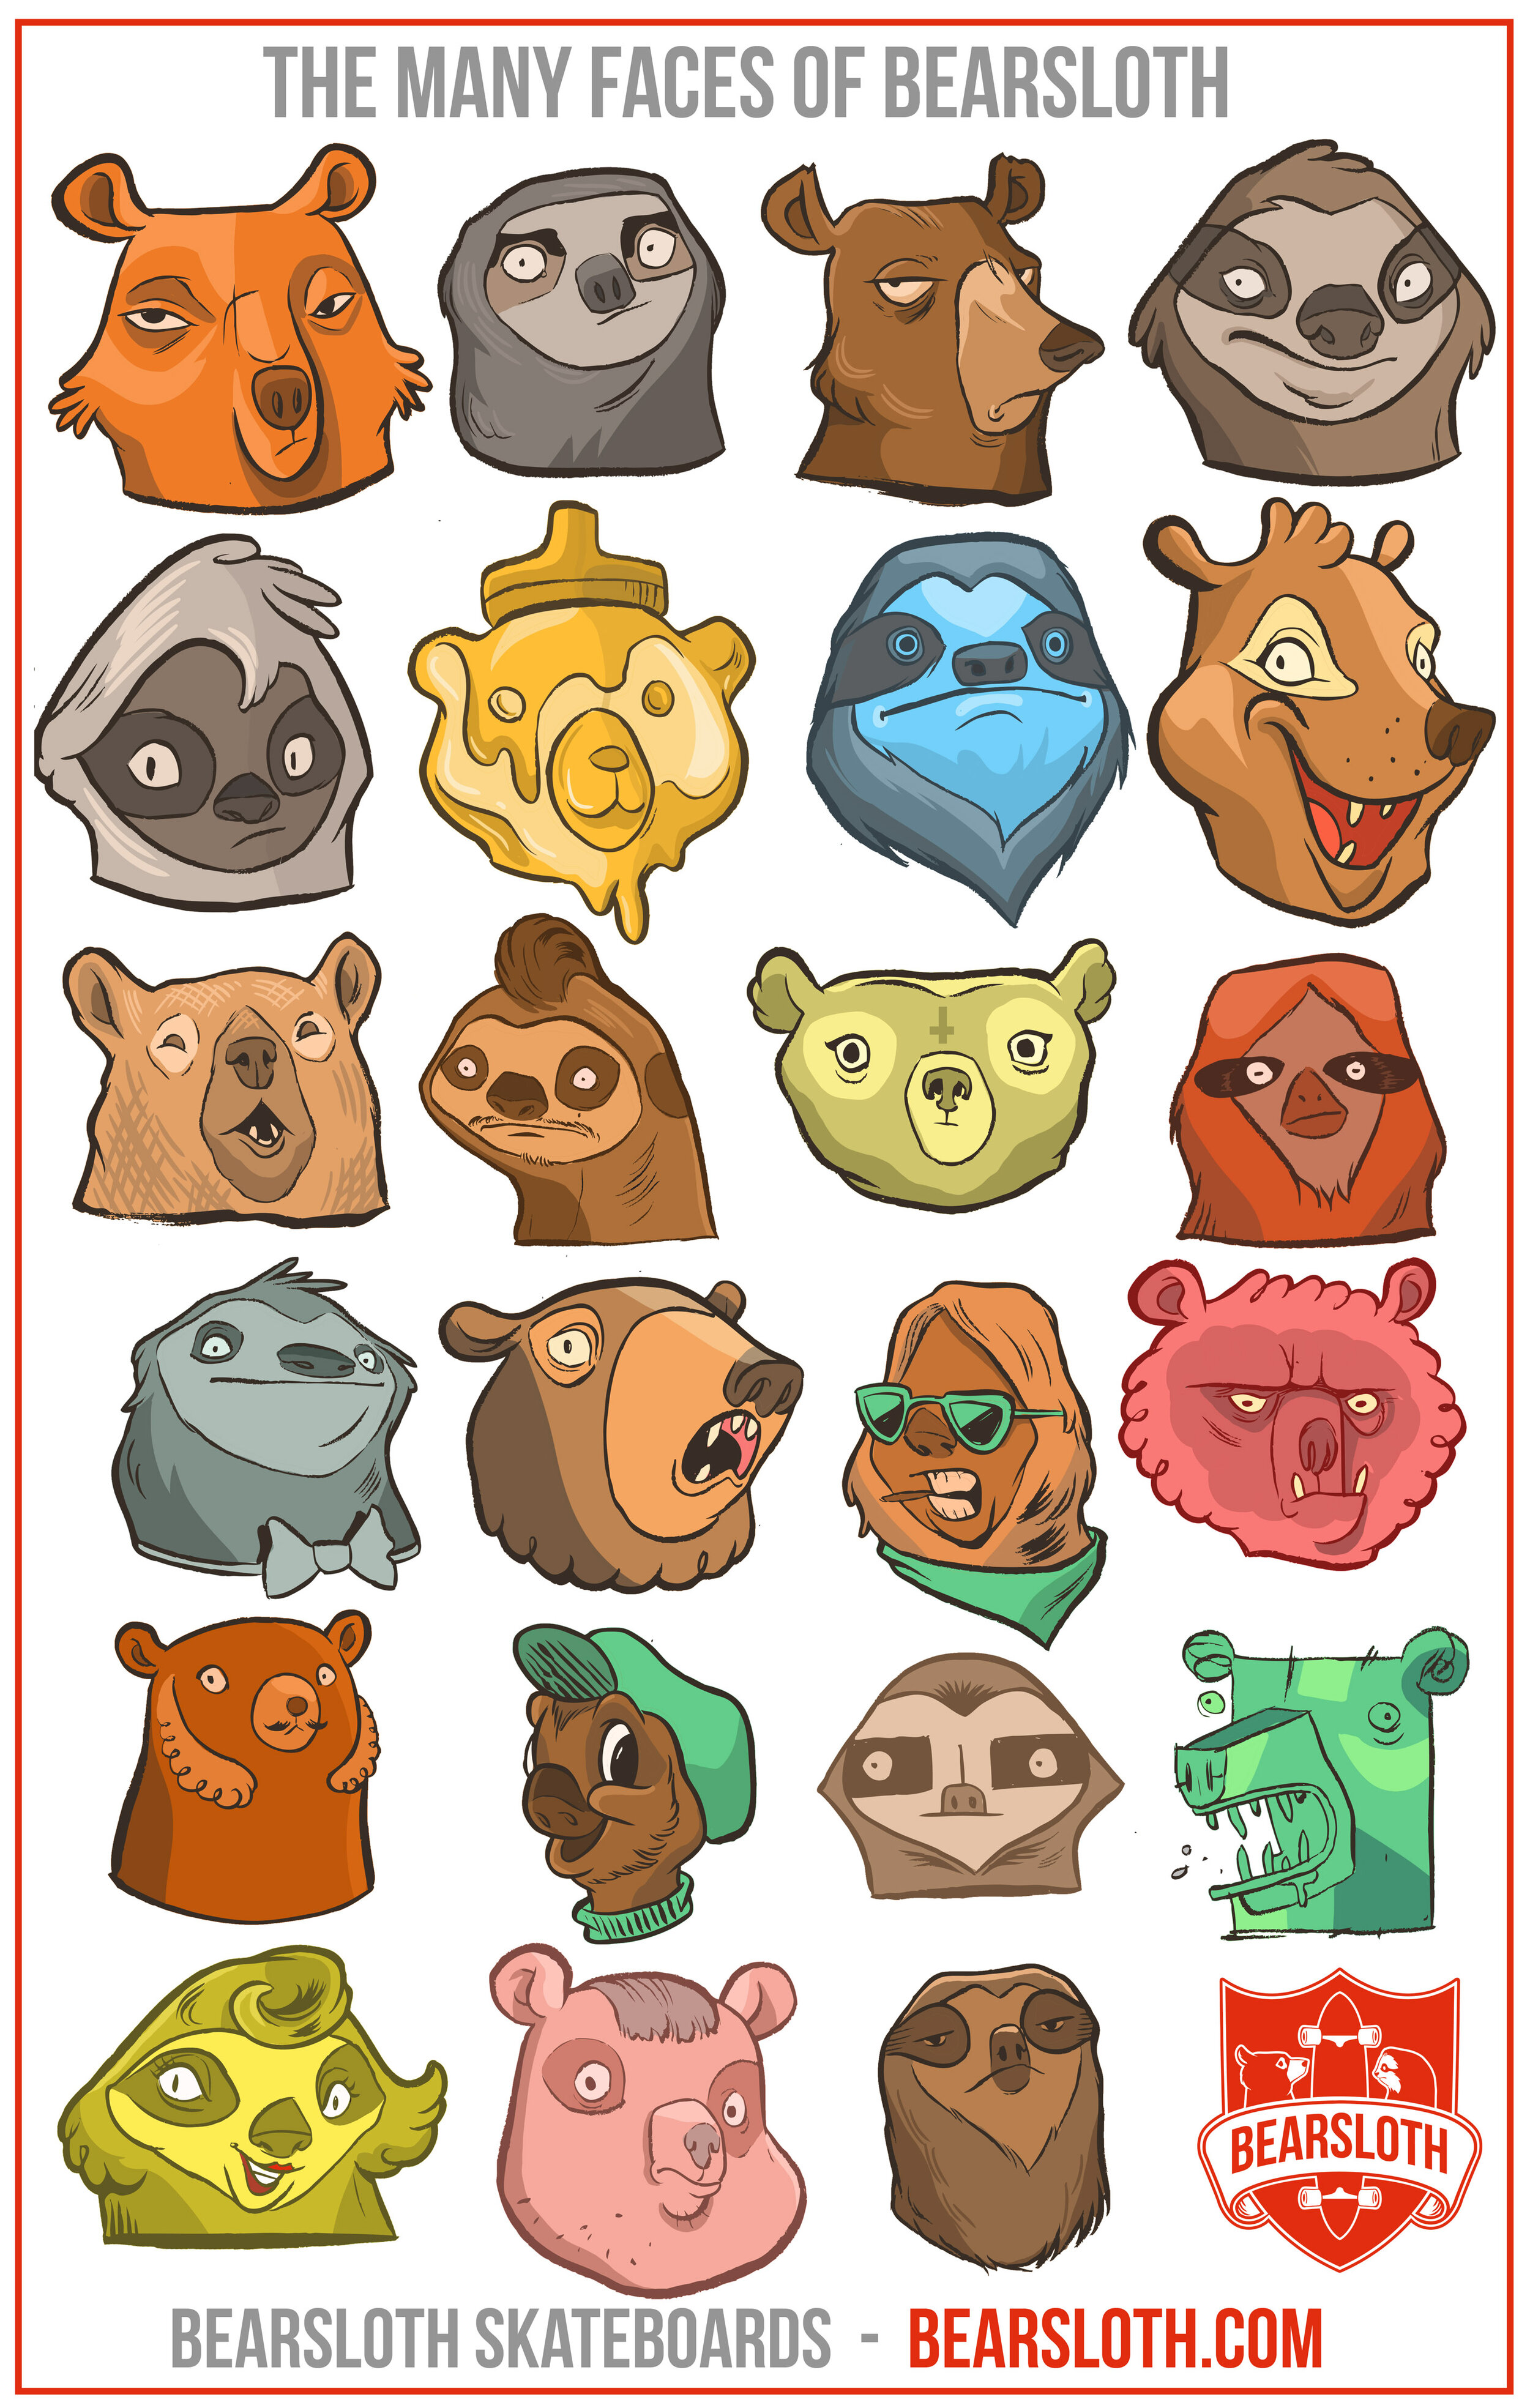 Faces of Bearsloth2.jpg